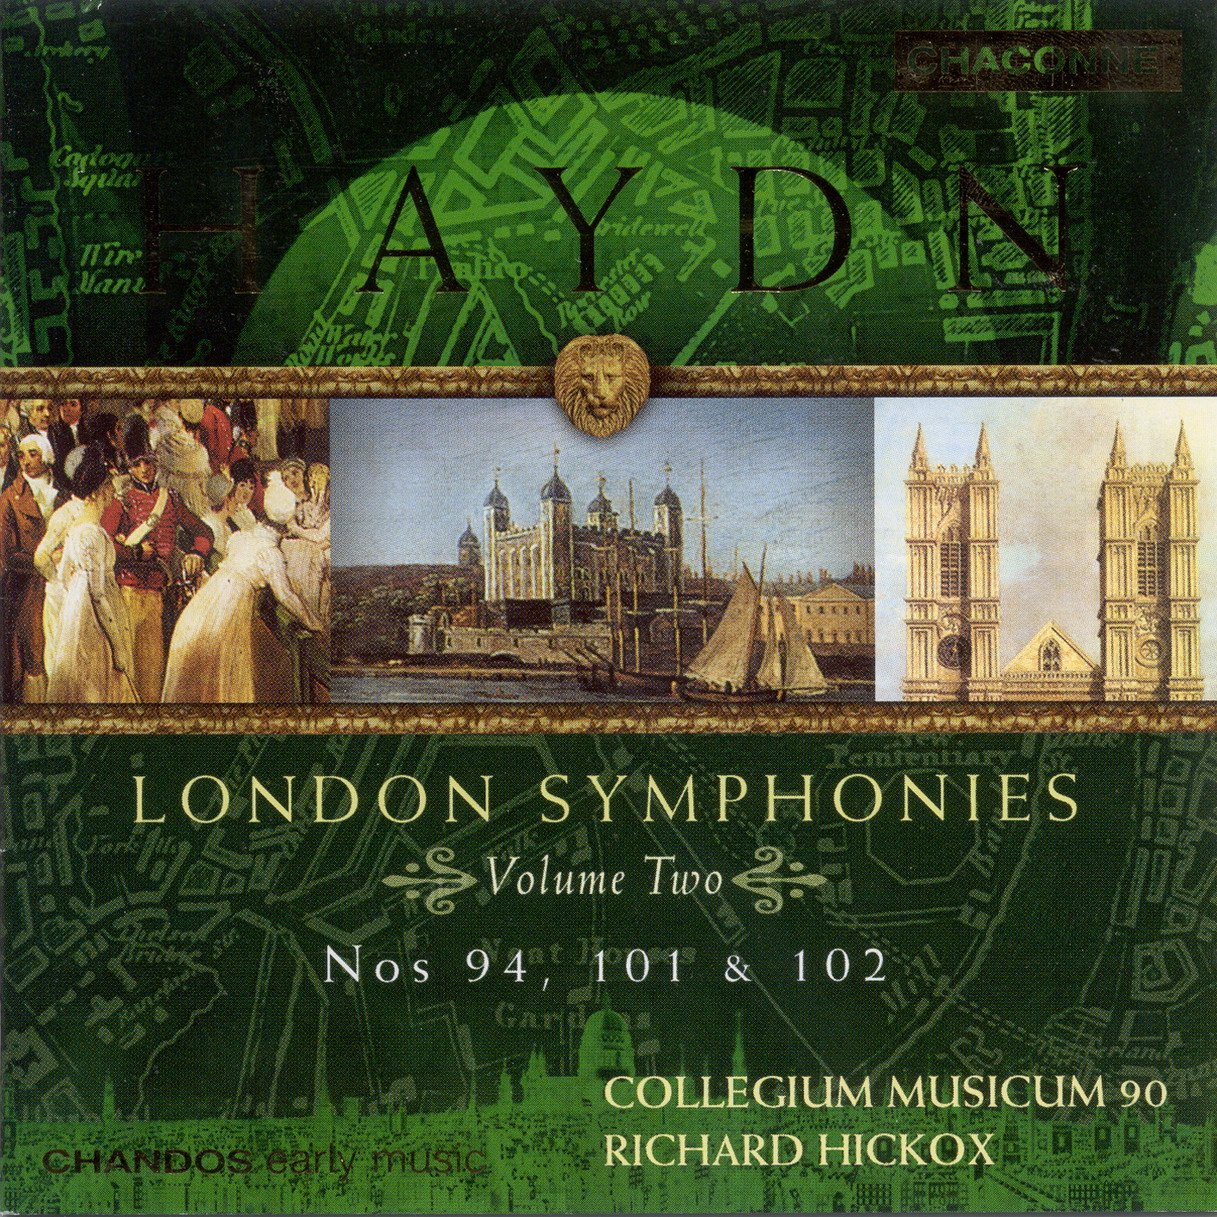 Collegium Musicum 90, Richard Hickox - Haydn: London Symphonies, Vol. 2 (2000) [HDTracks FLAC 24bit/96kHz]